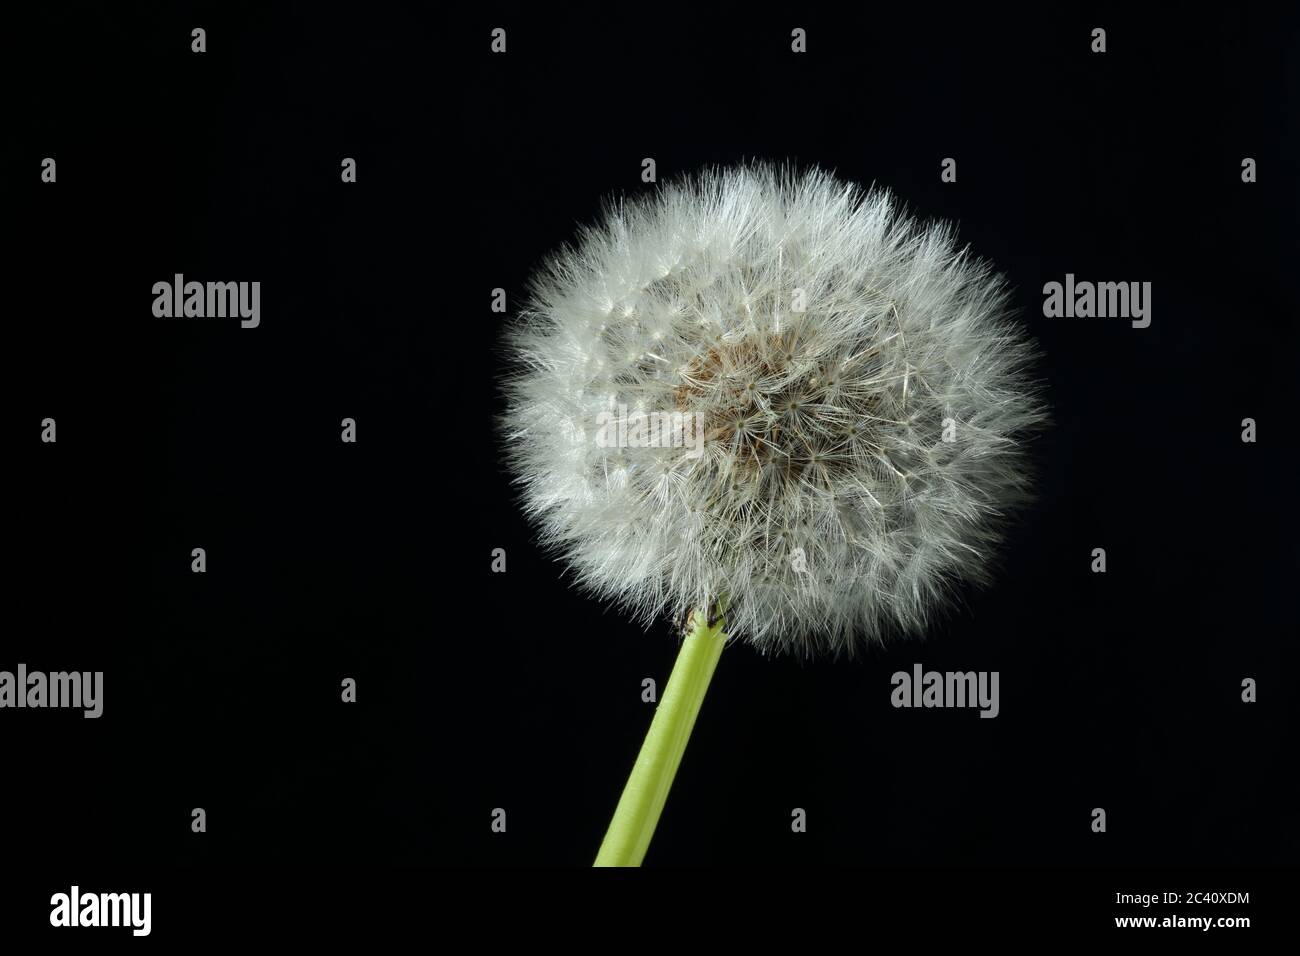 Seed head clock of a single dandelion - Taraxacum officinalis - against a black background Stock Photo